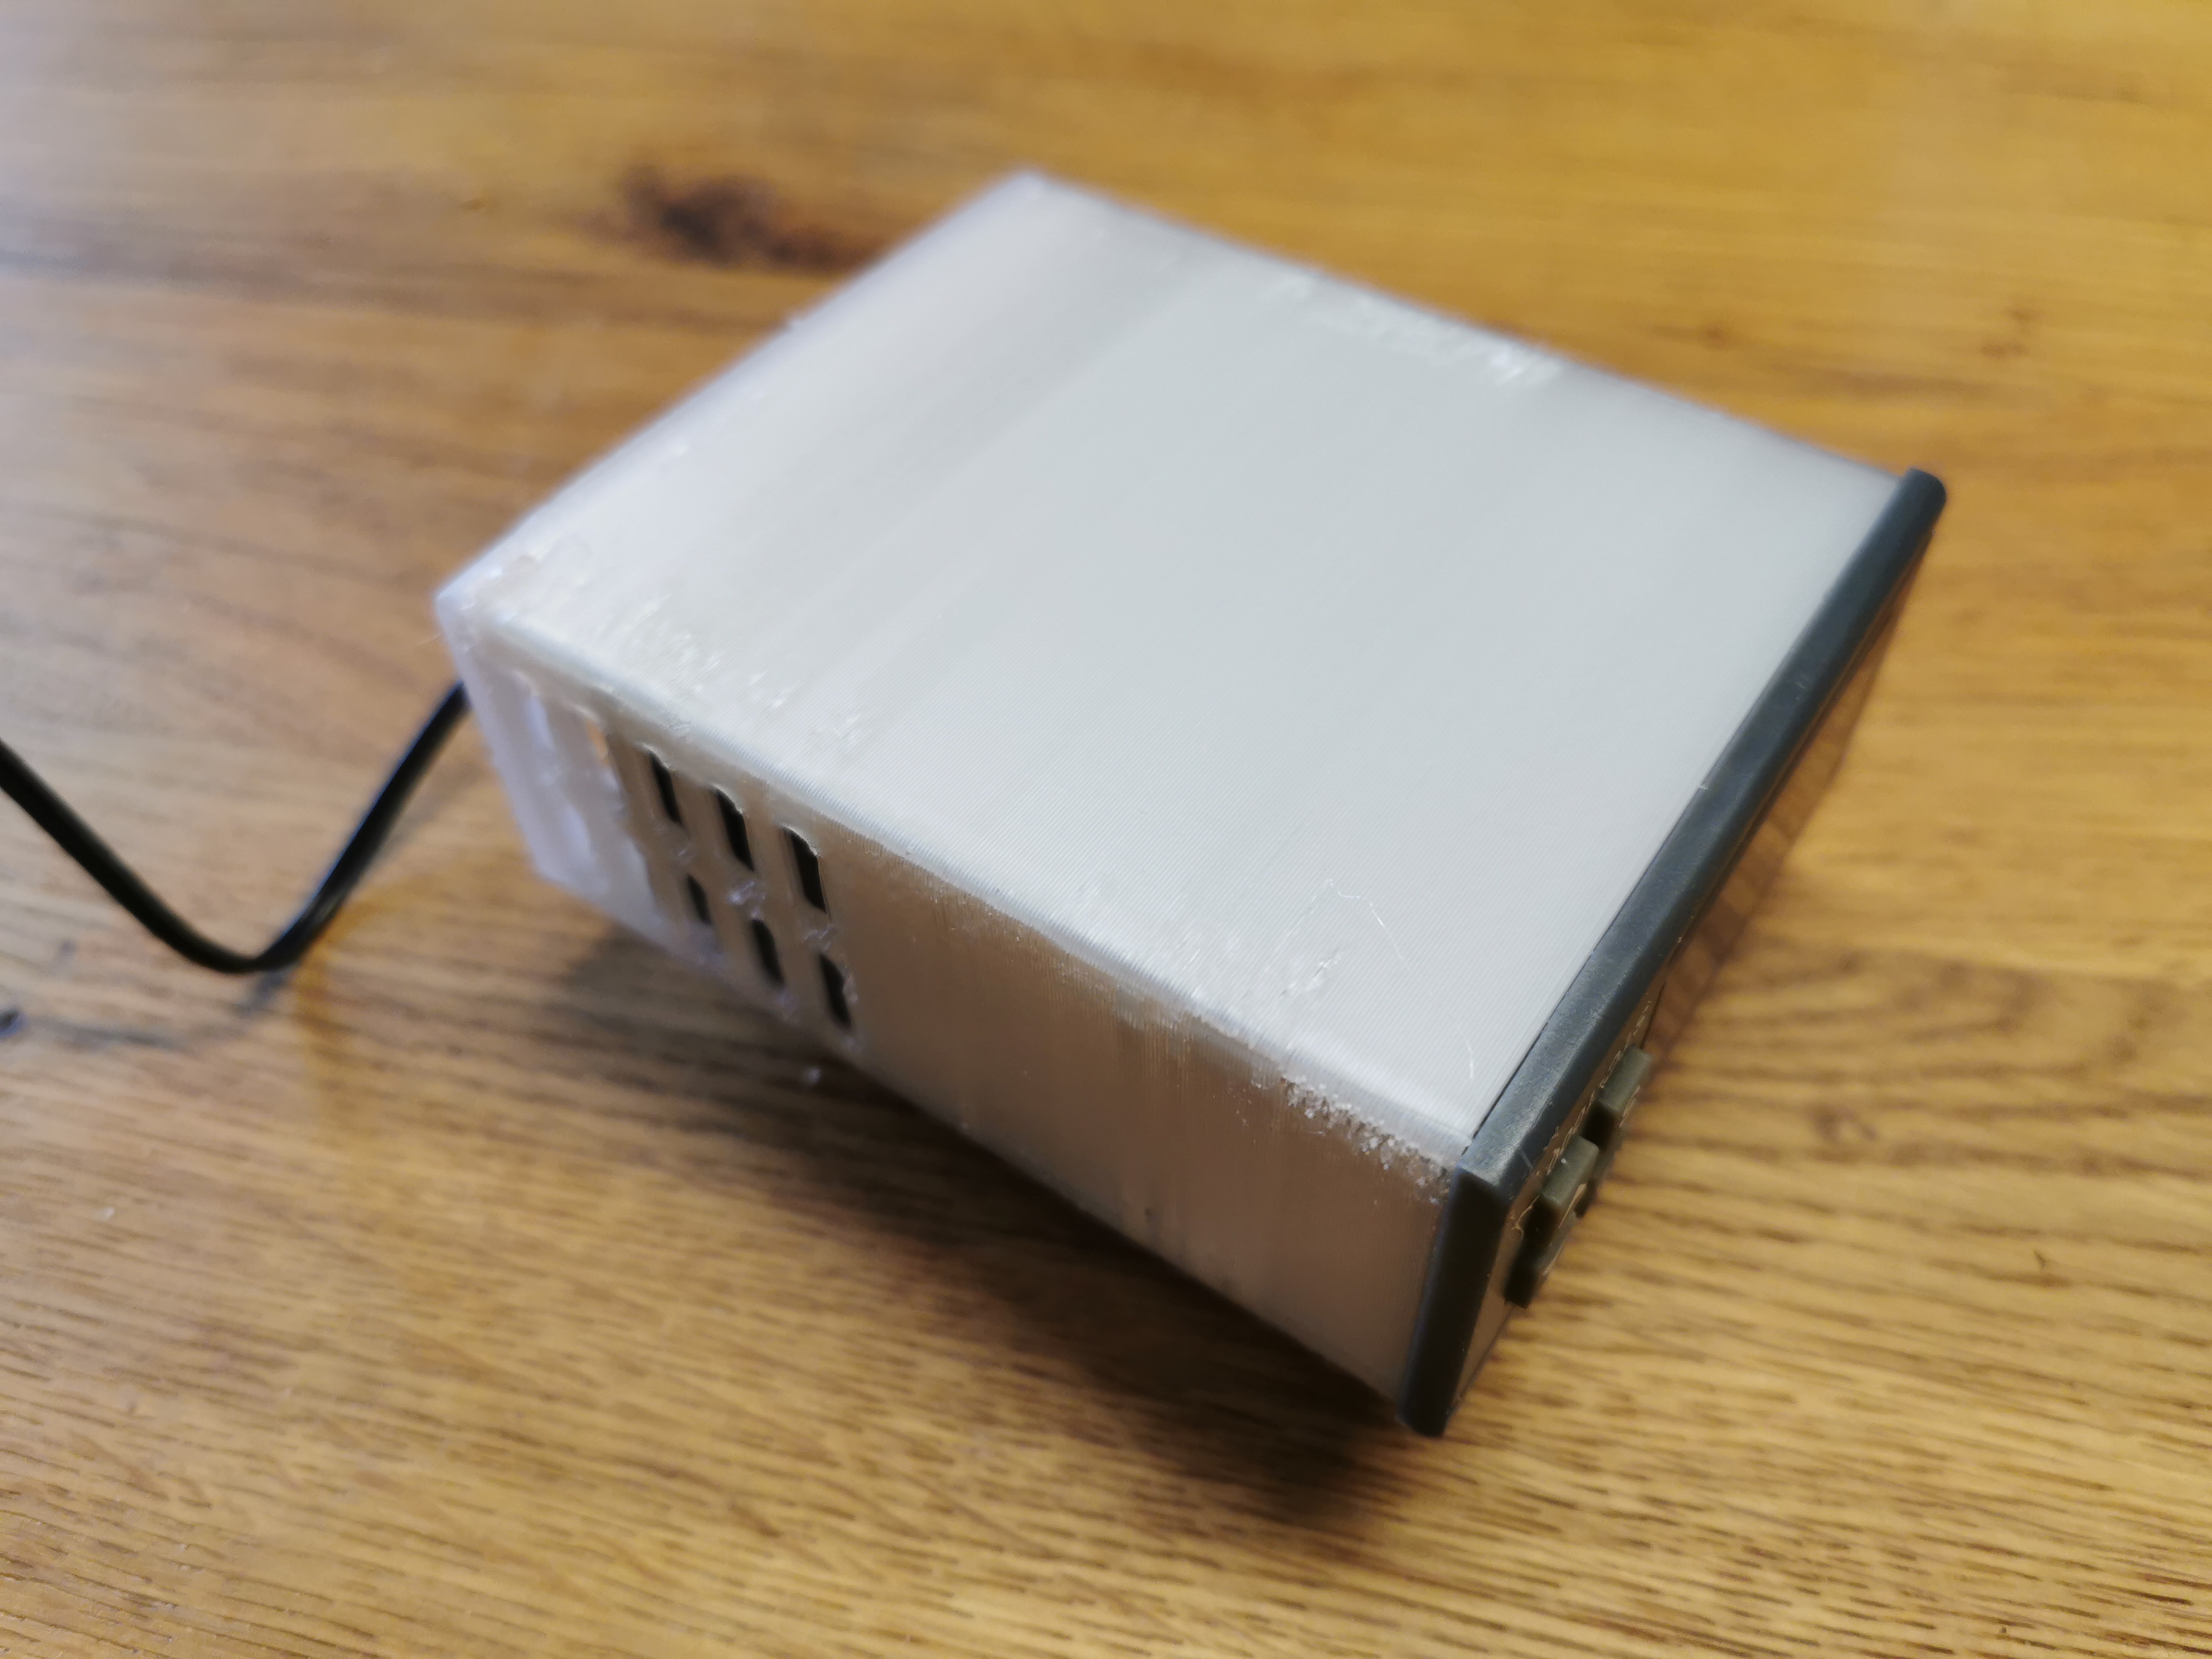 Box for a STC-1000 temperature controller